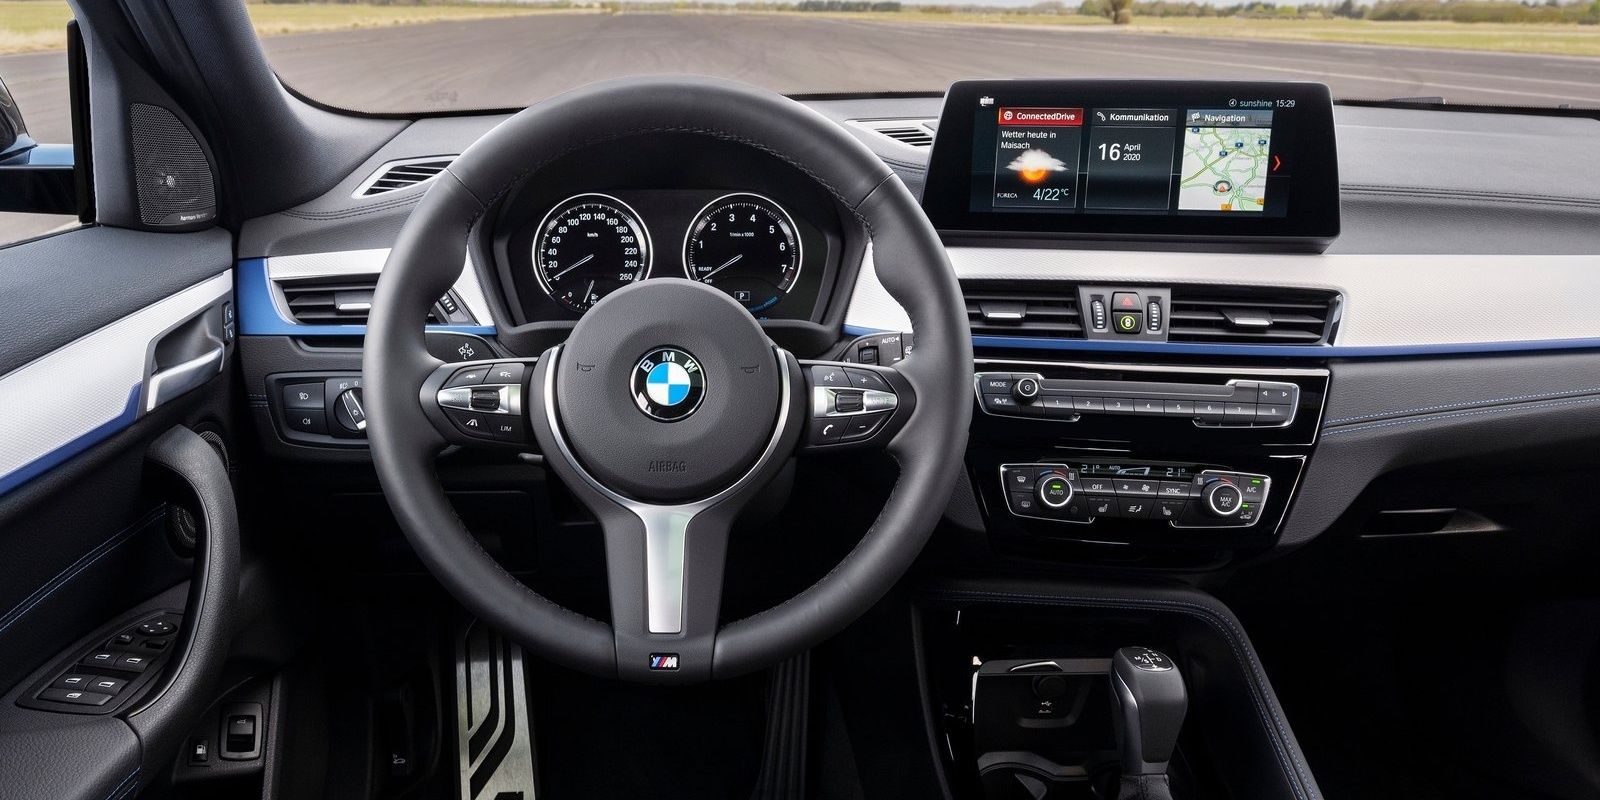 BMW X2 steering wheel dashboard